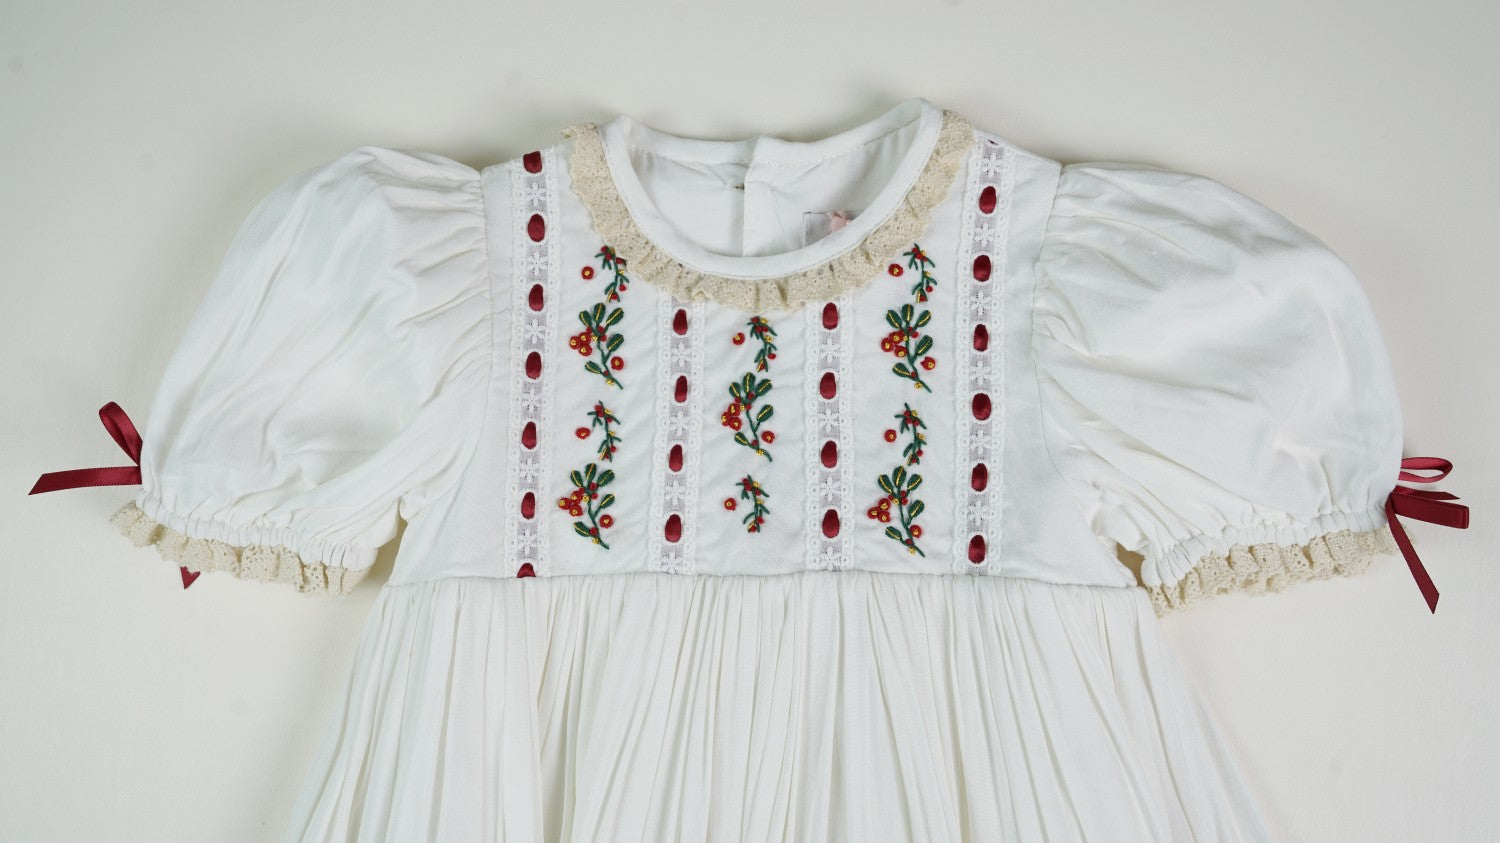 JannyBB Handmade Embroidery Heirloom Red Dress